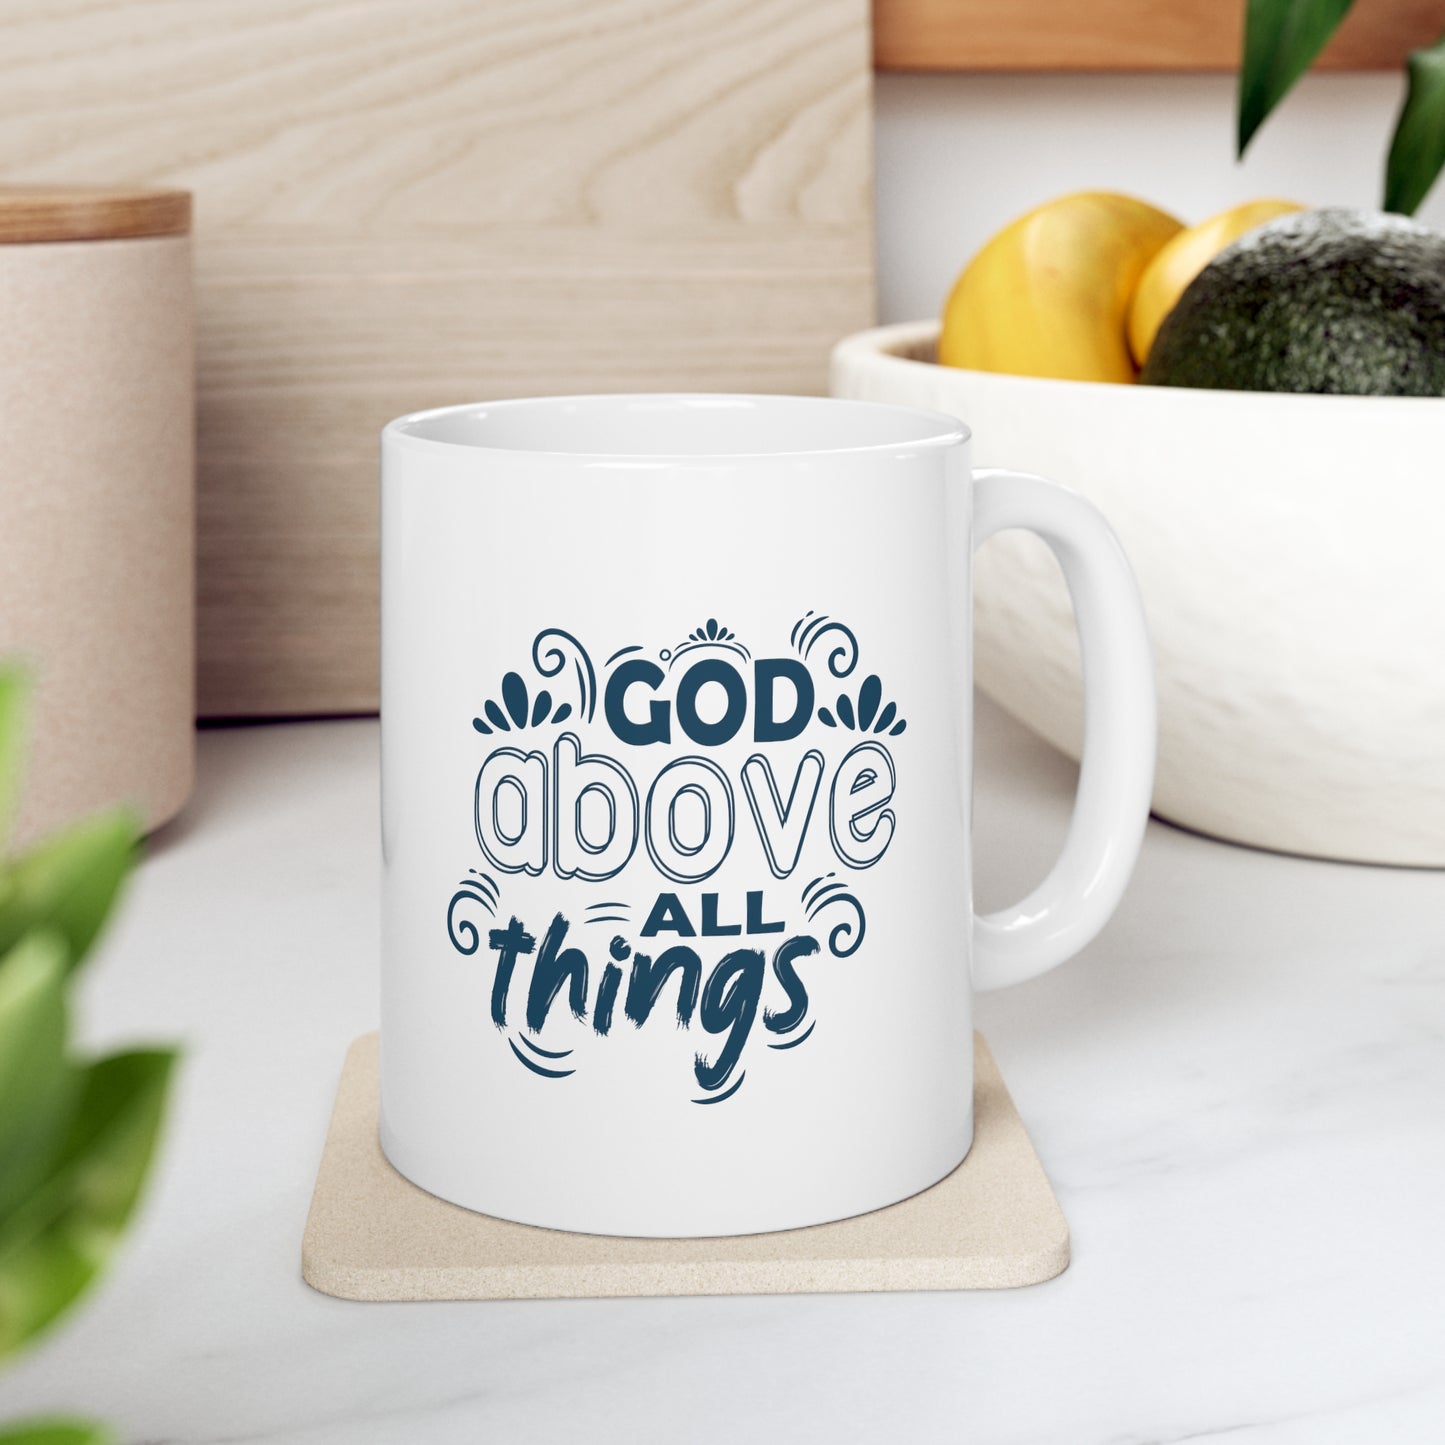 God Above All Things Christian White Ceramic Mug 11oz (double sided print)